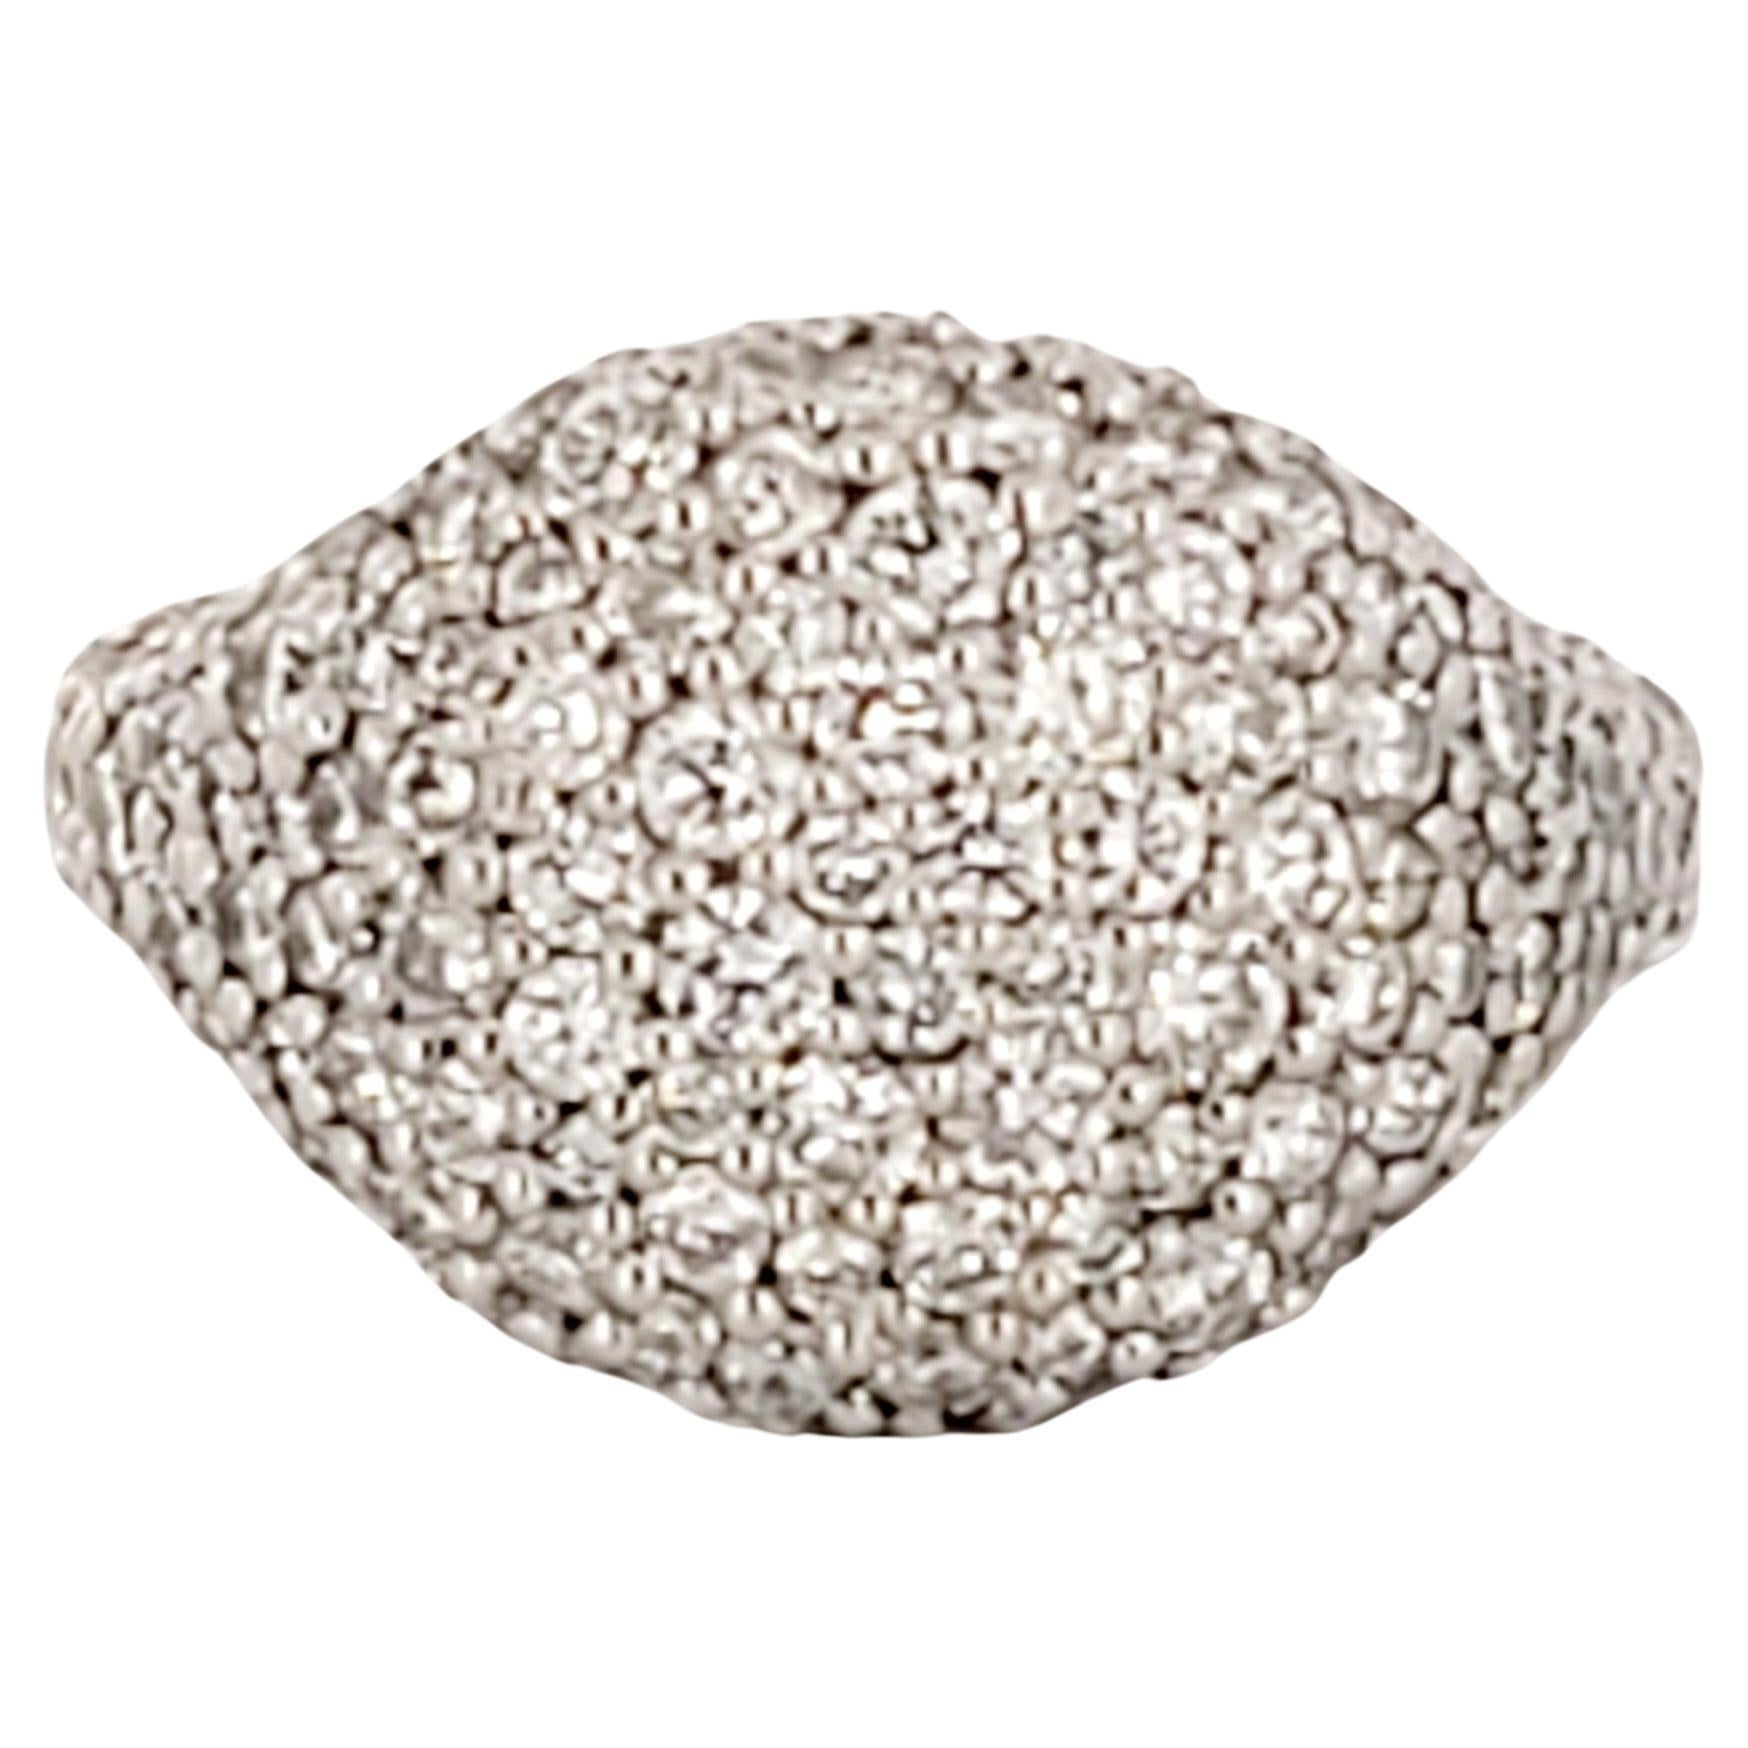 David Yurman Diamond Pinky Ring in 18k White Gold size 3.75